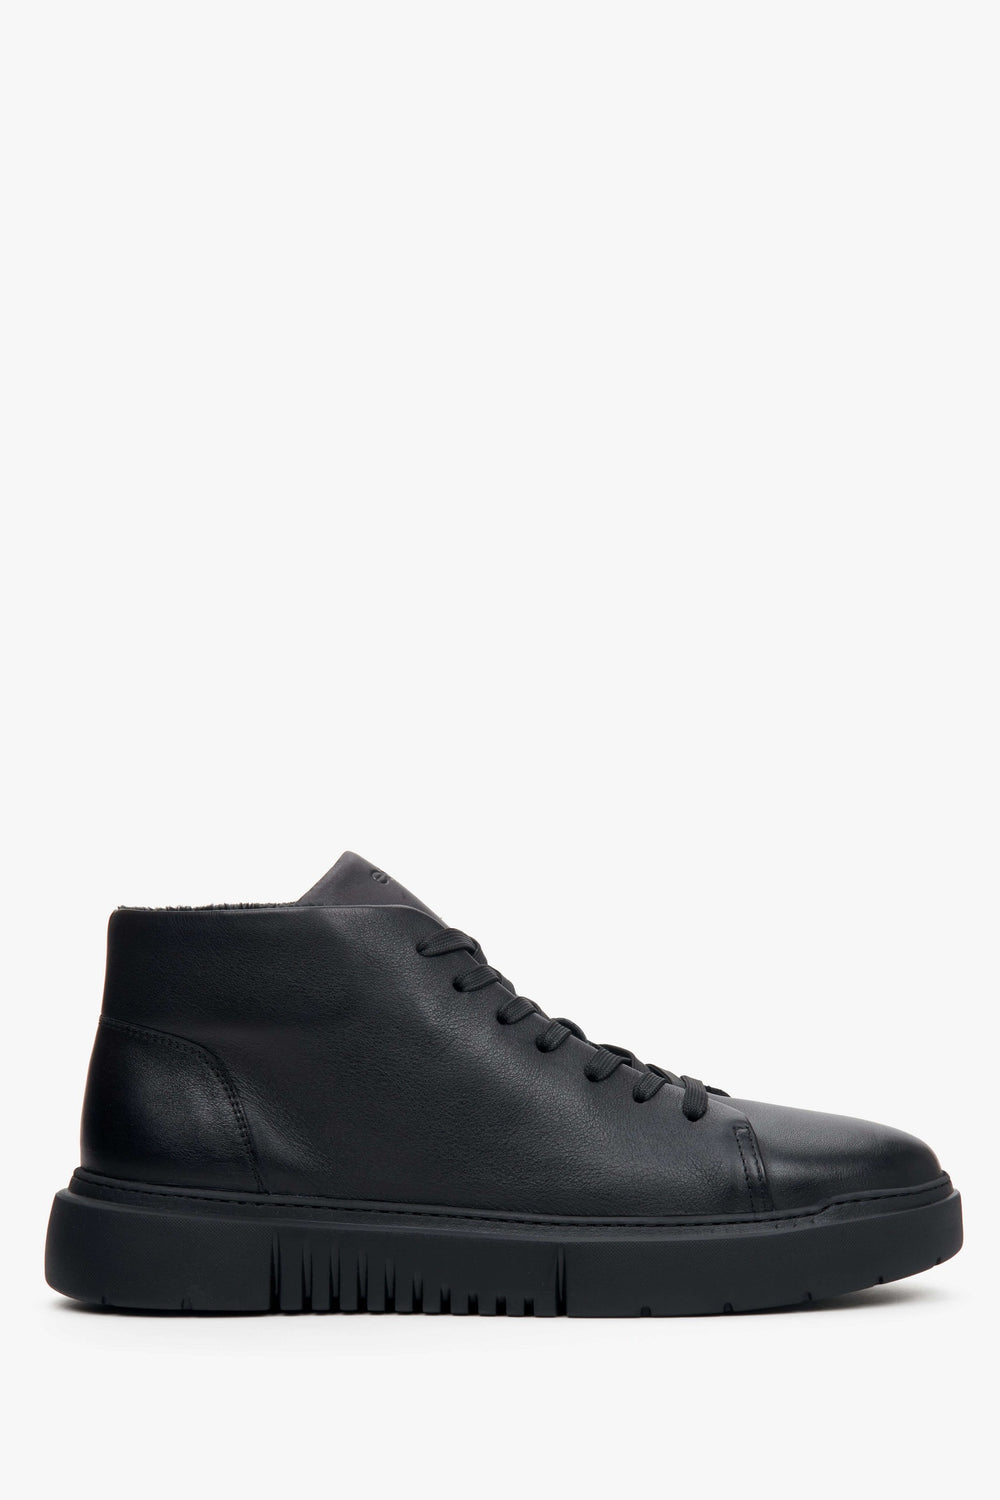 Men's High-top Black Sneakers made of Genuine Leather Estro ER00111655.